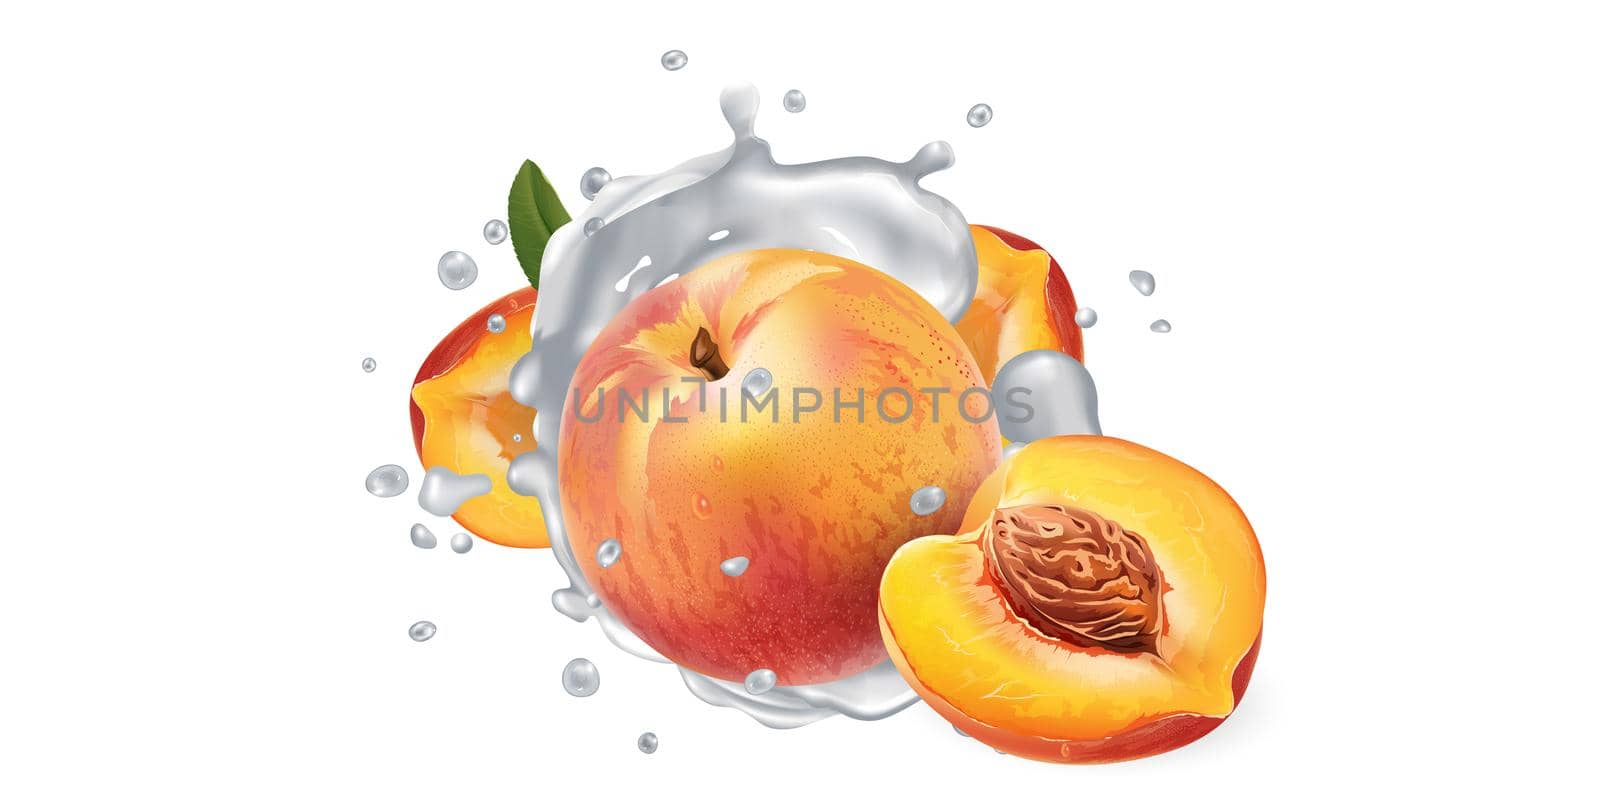 Fresh peaches in milk splashes on a white background. Realistic style illustration.